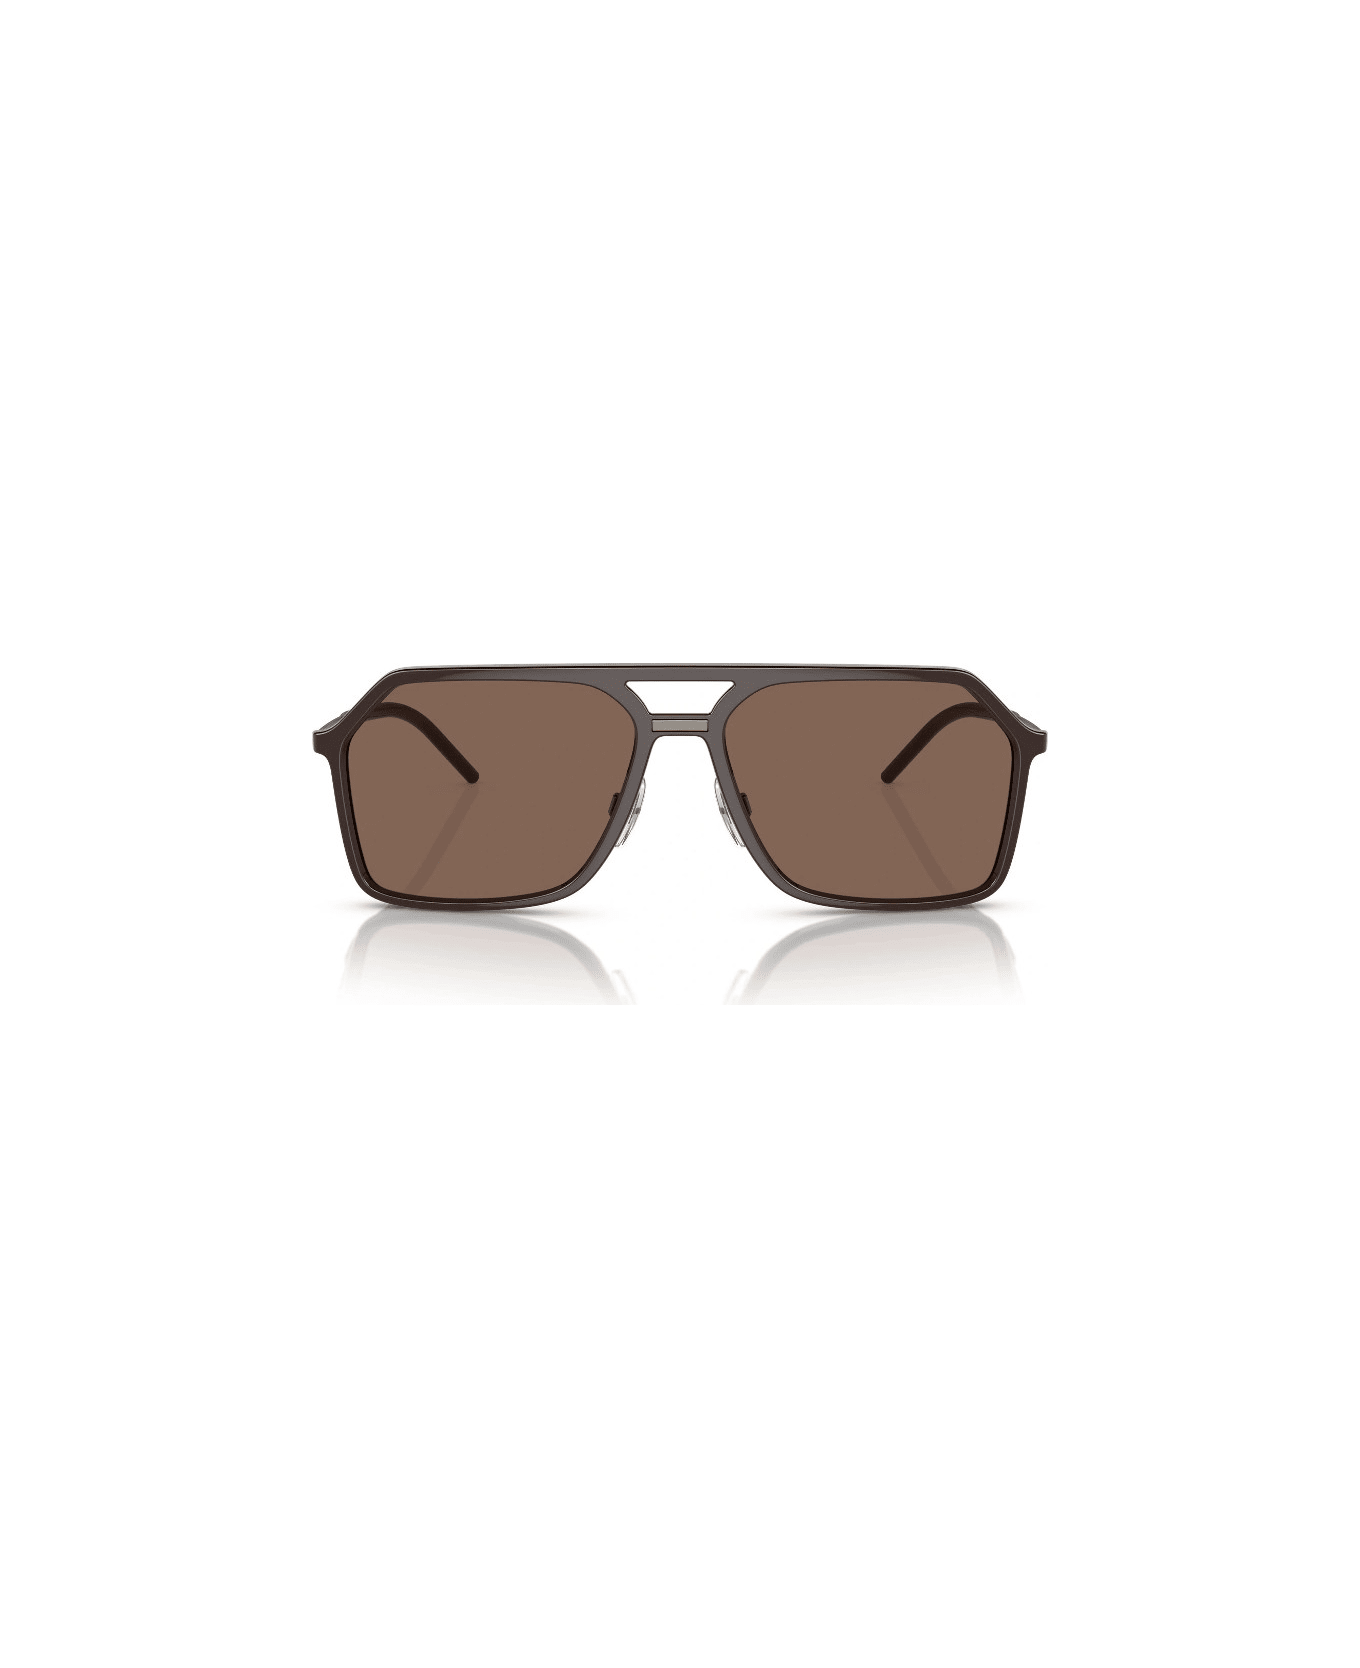 Saint Laurent Saint Laurent Sl 429 Silver Sunglasses Eyewear DG6196 3159/73 Sunglasses - Marrone